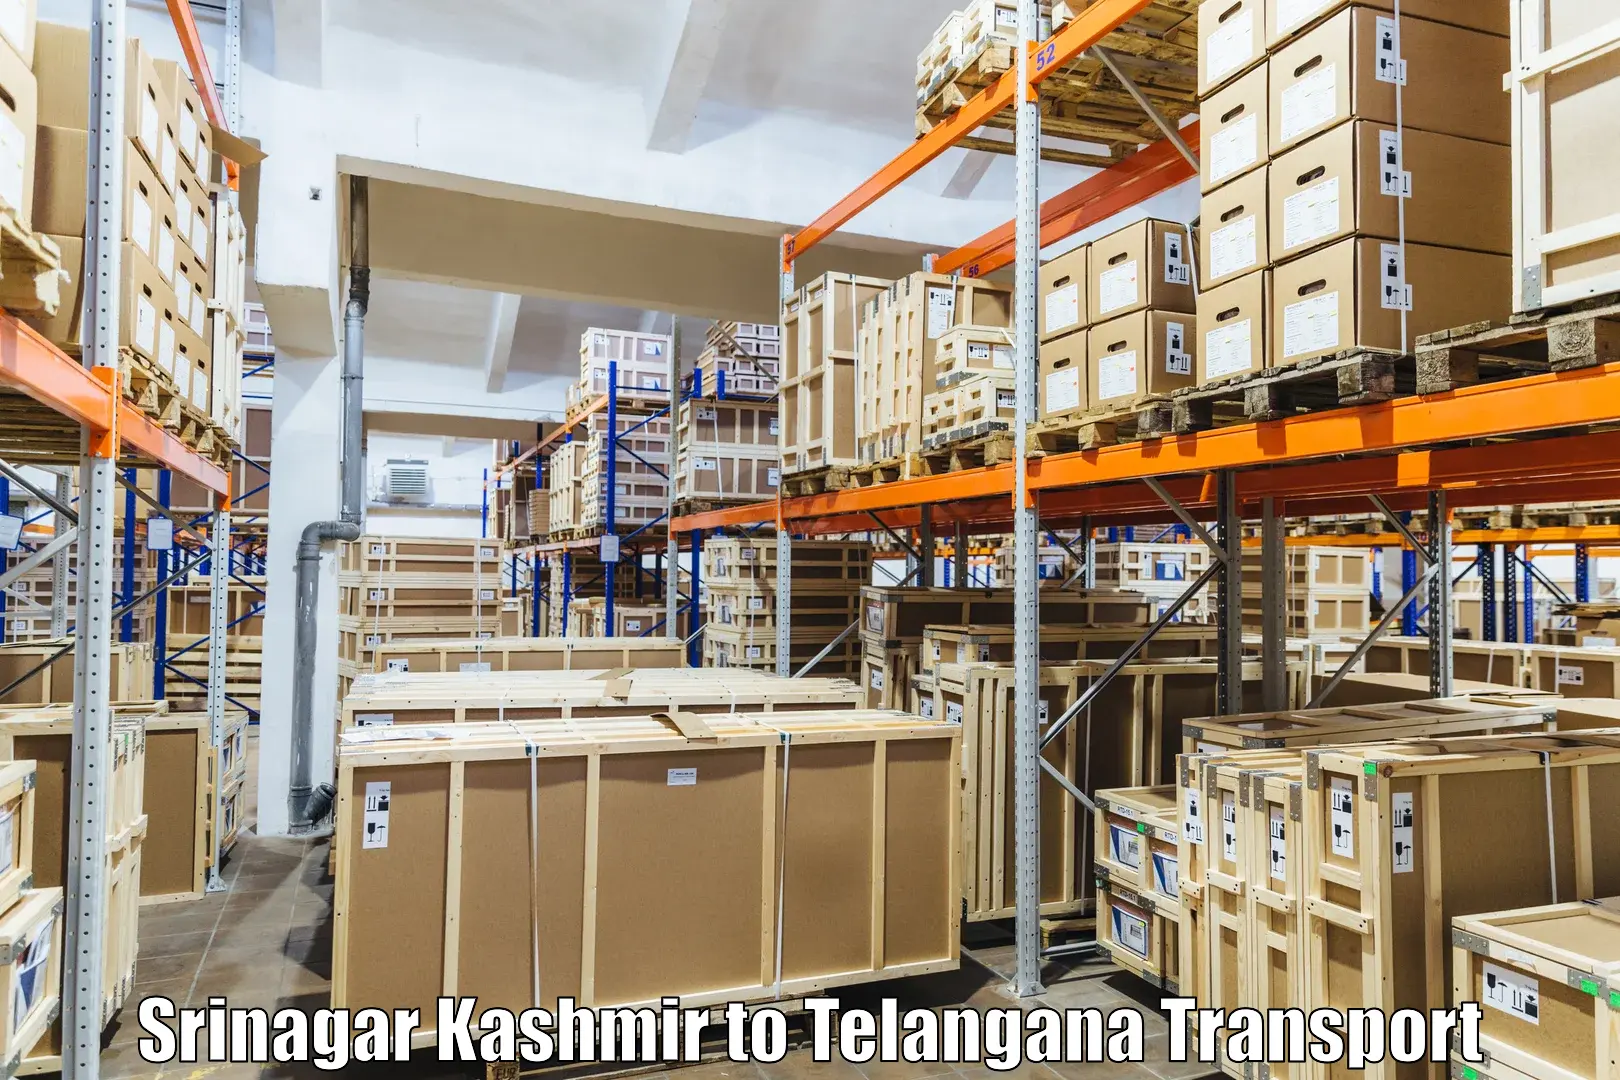 Nearest transport service Srinagar Kashmir to Eligedu